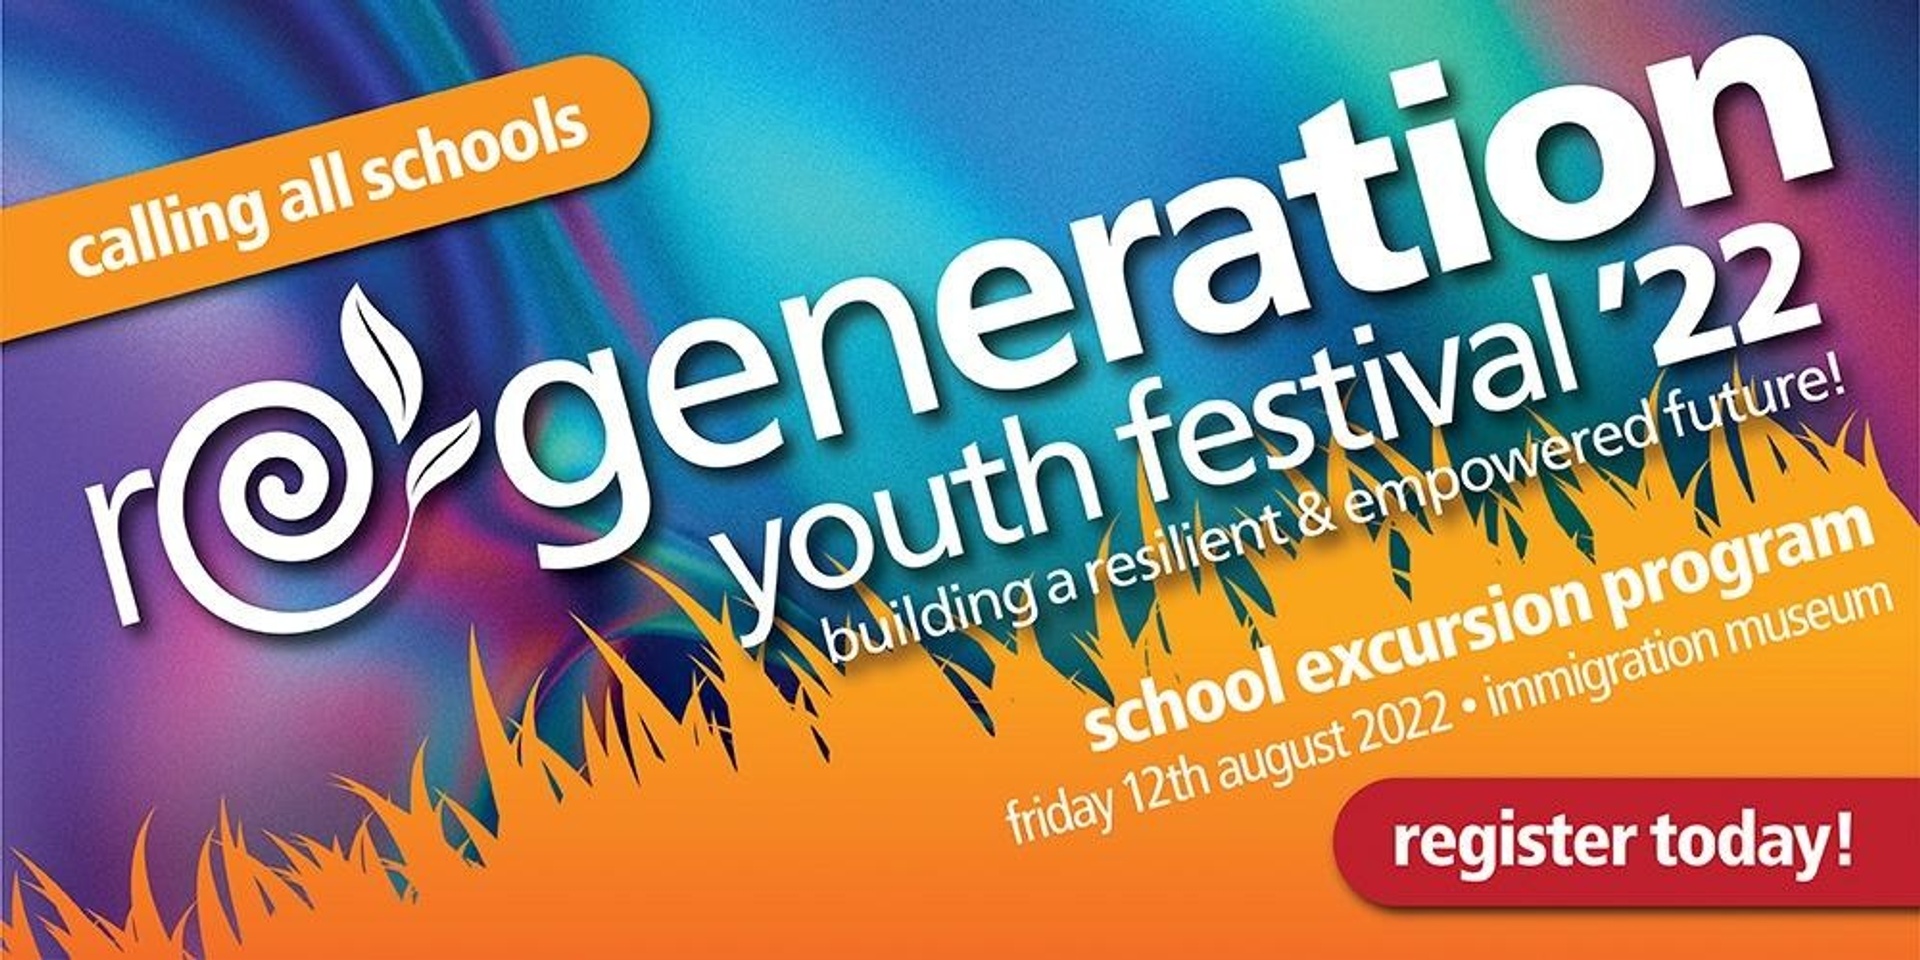 re-generation youth festival 2022 - school excursion program